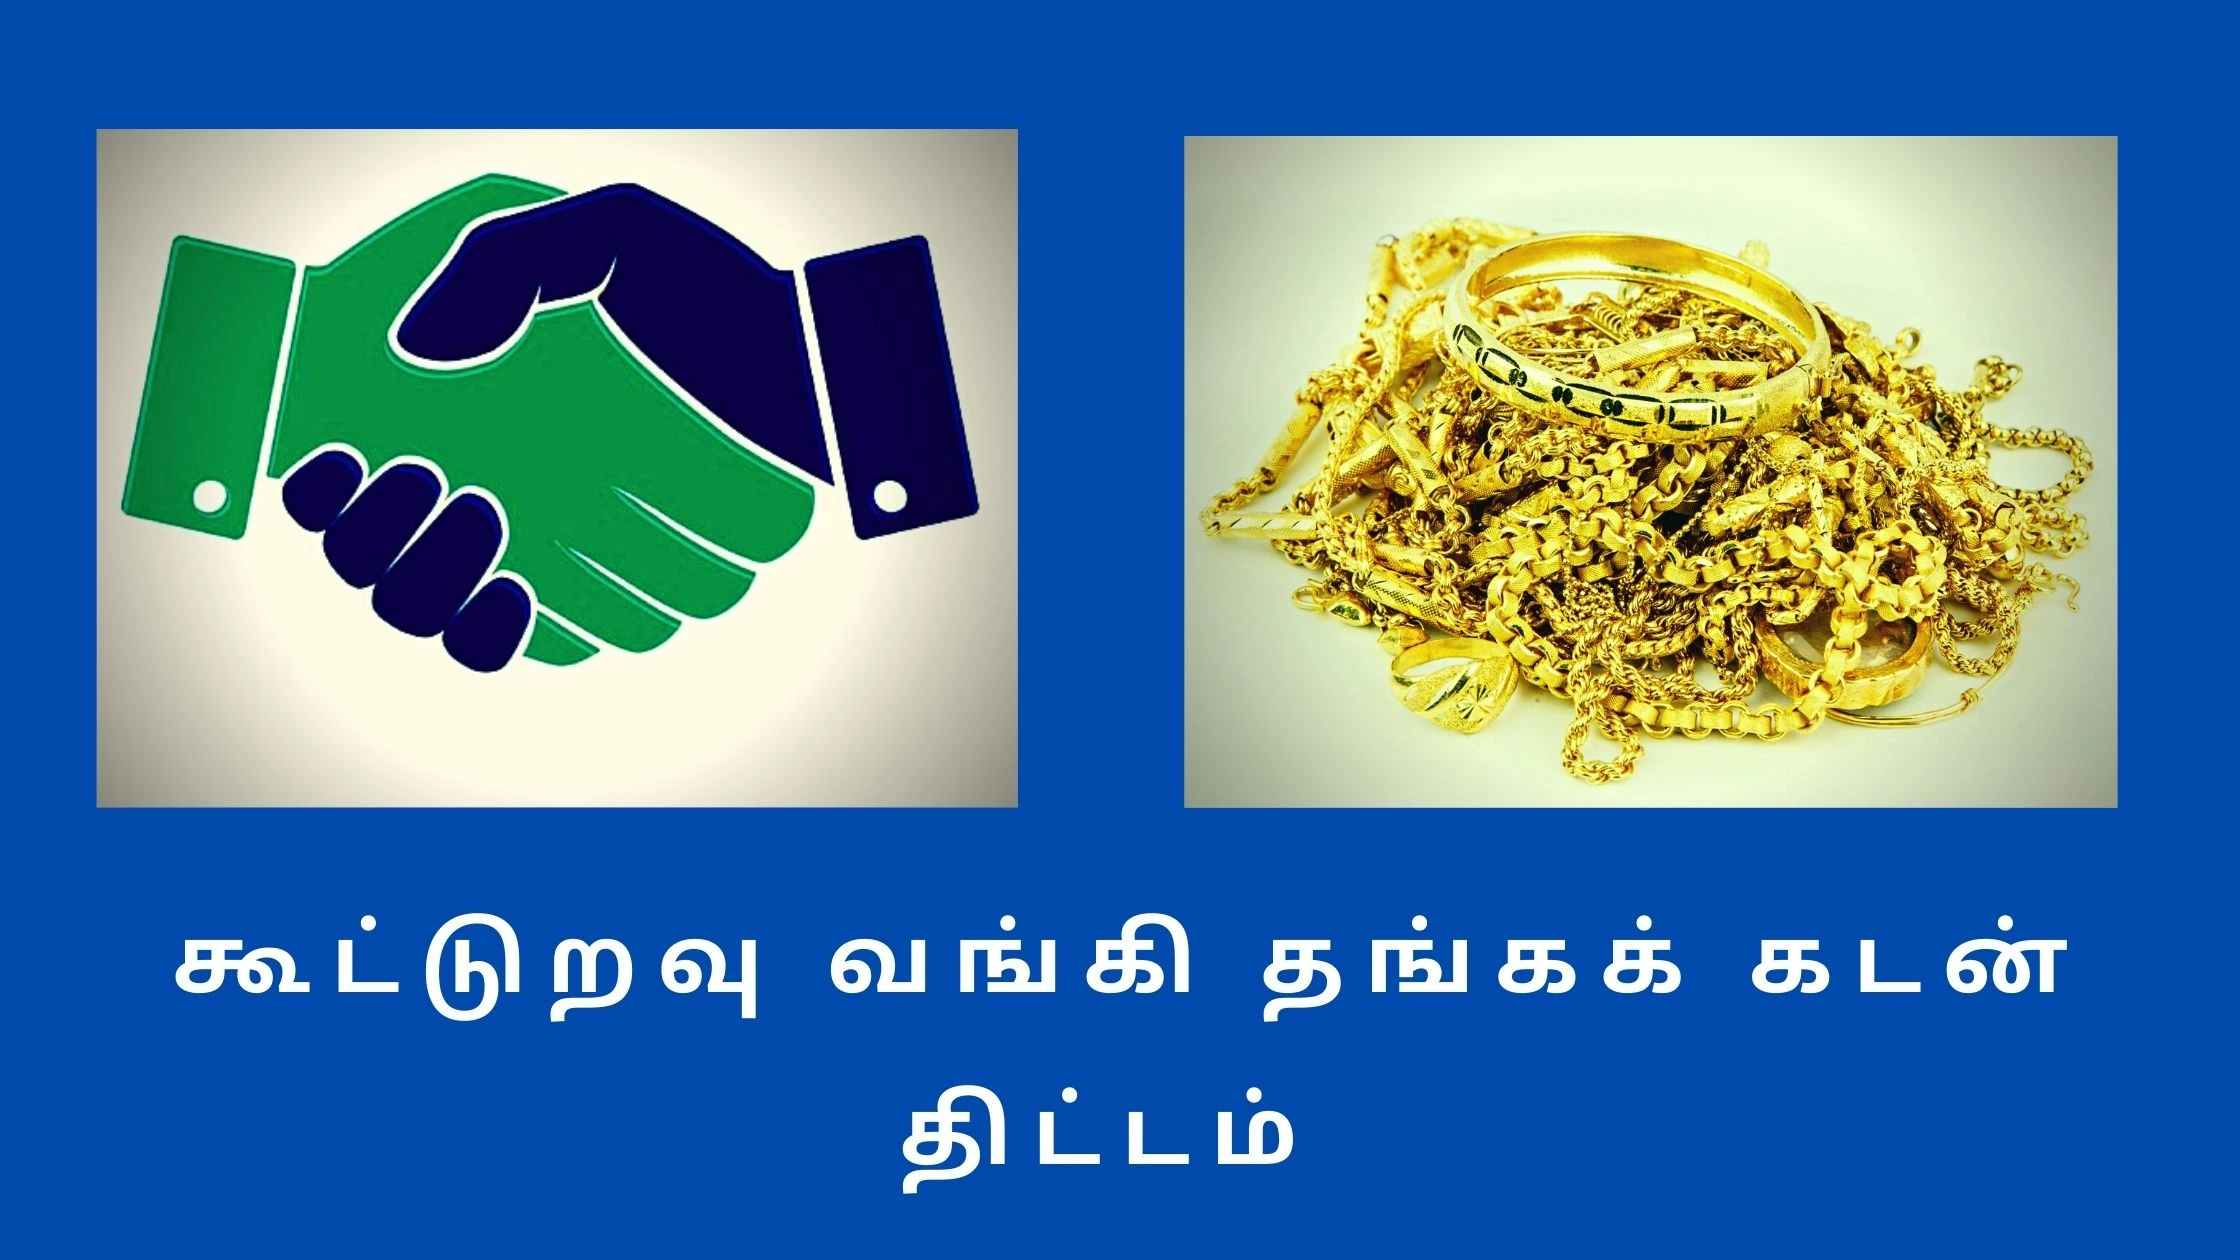 Kooturavu bank gold loan in Tamil